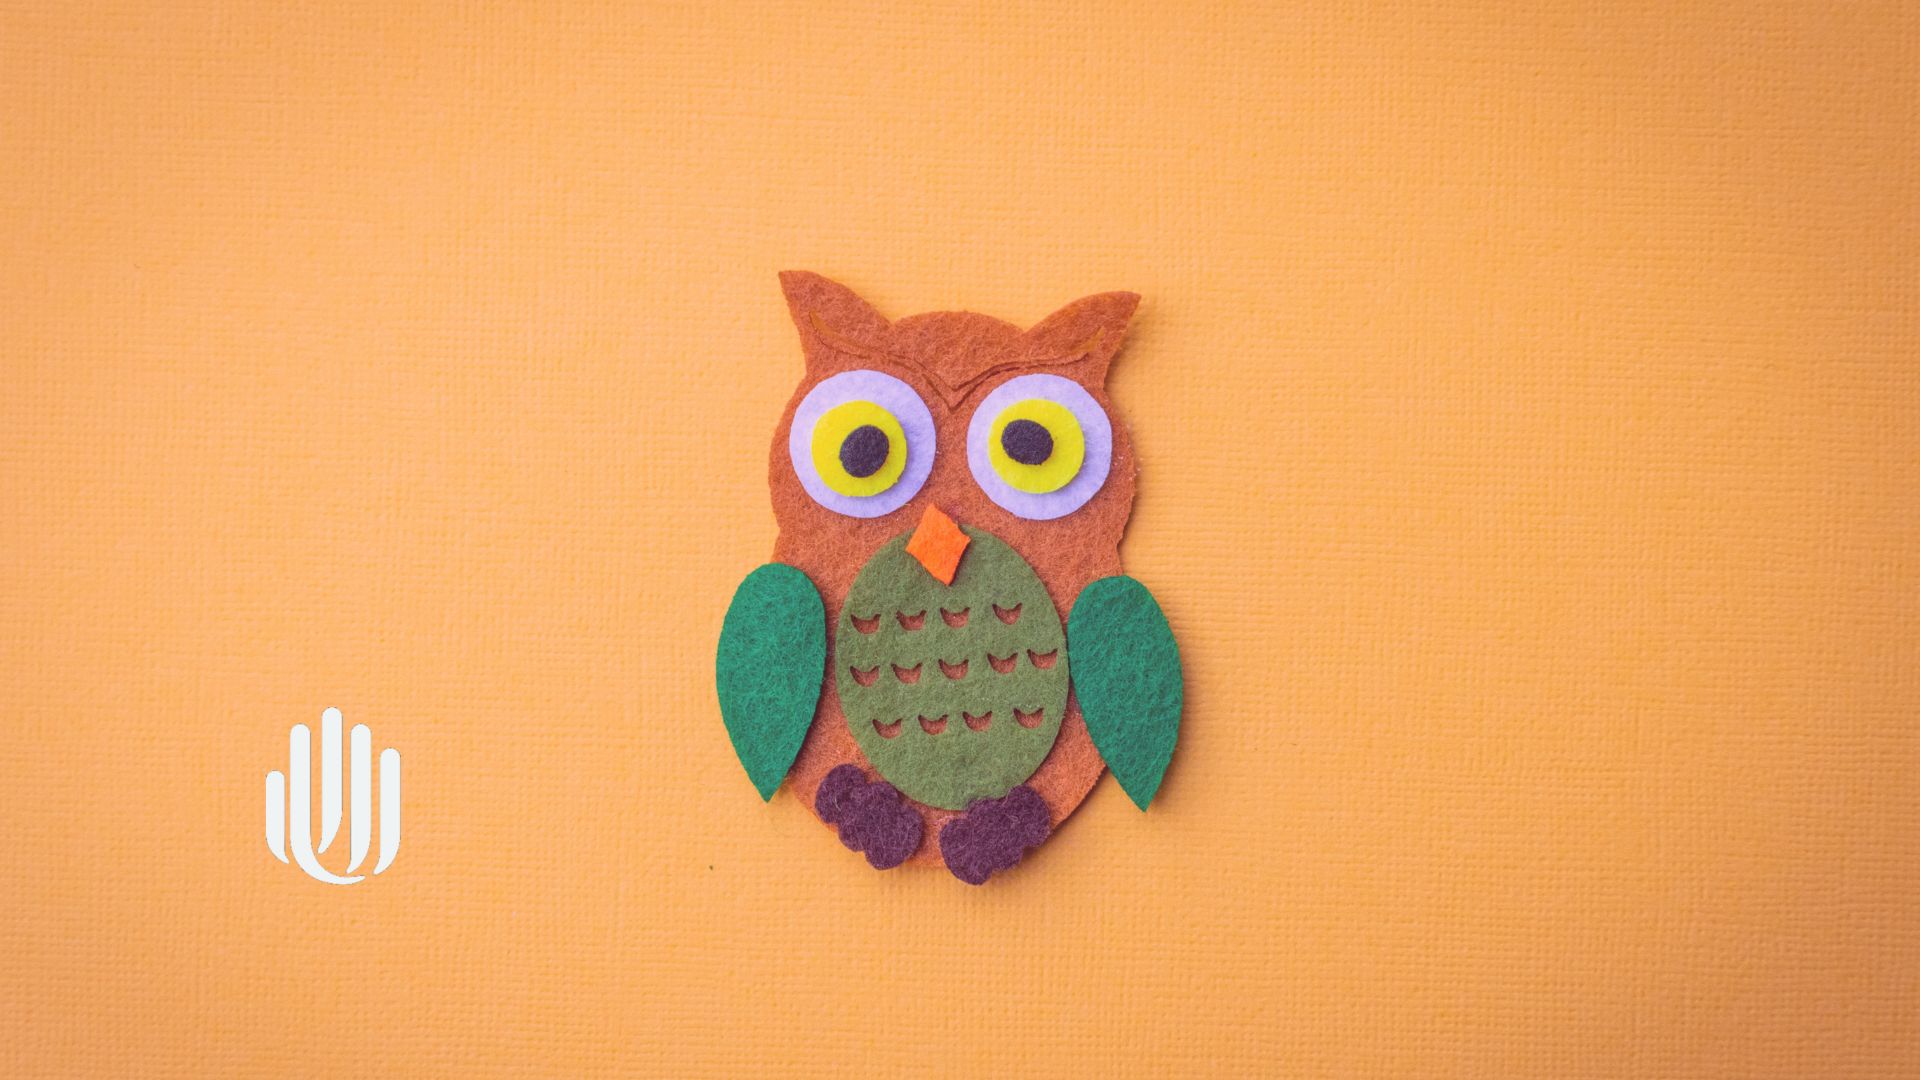 colourful felt owl on an orange background